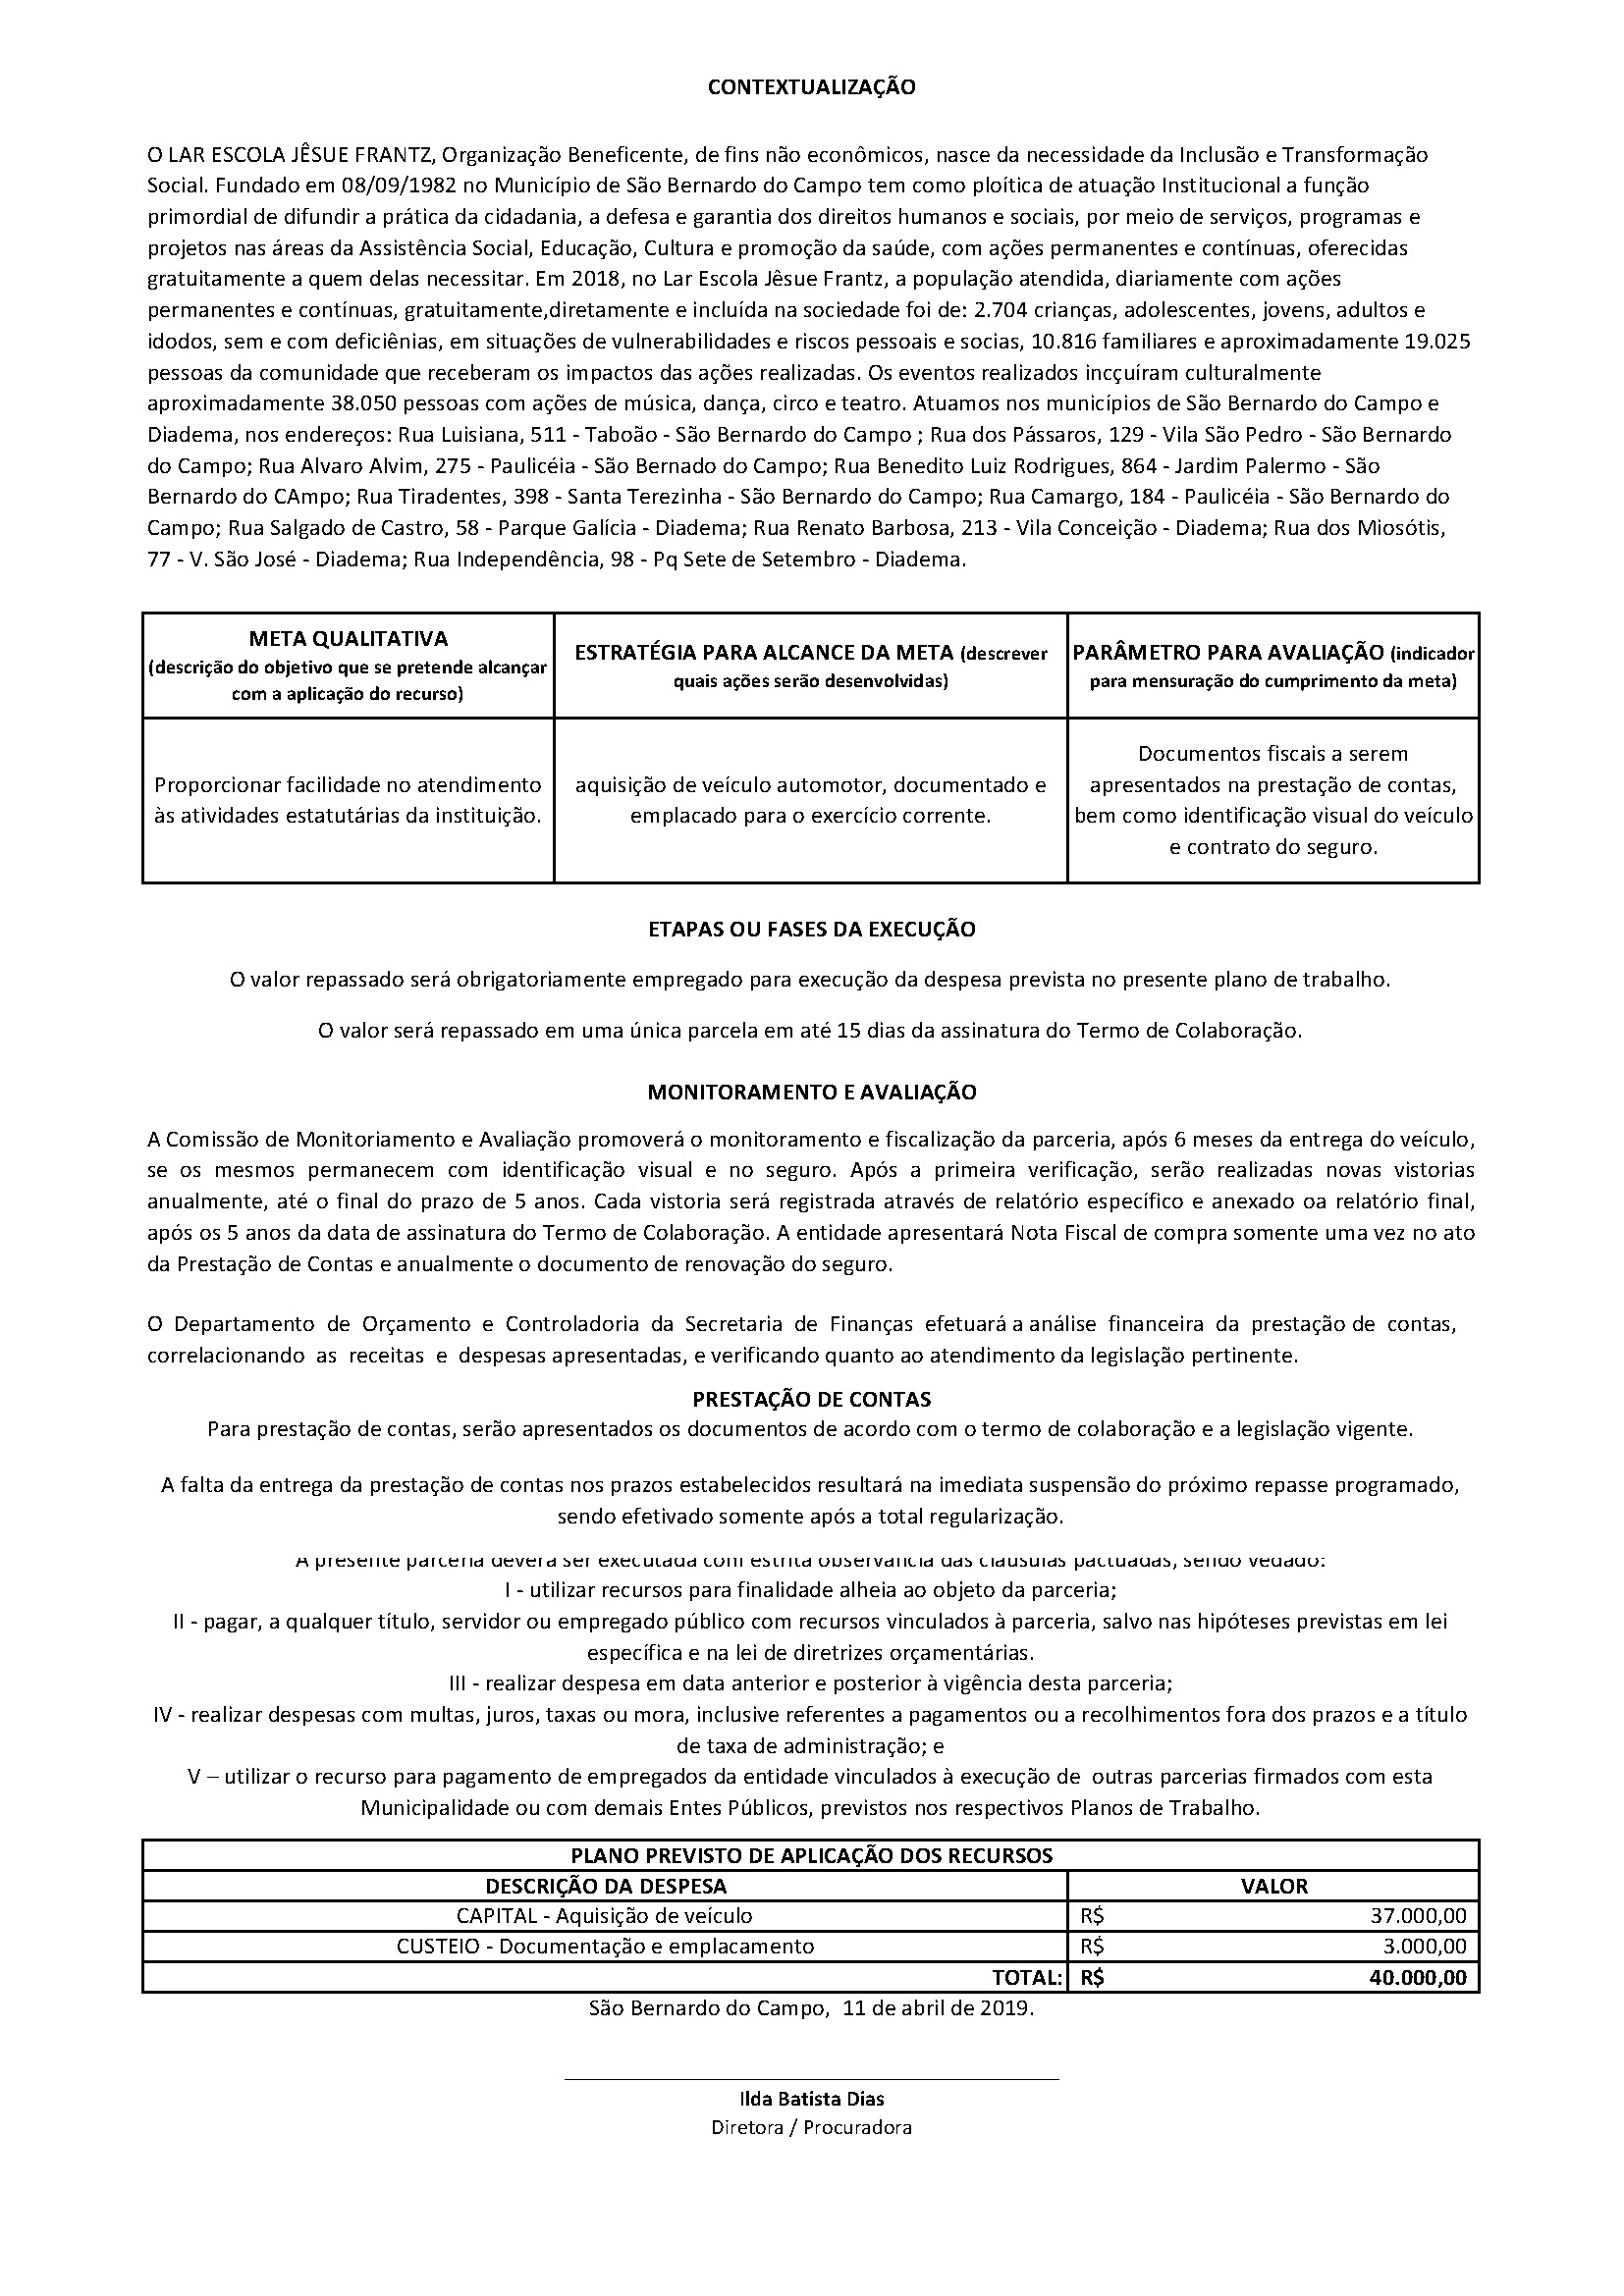 Plano-de-Trabalho-2019-Fundo-Social-SBC_Page_2.jpg